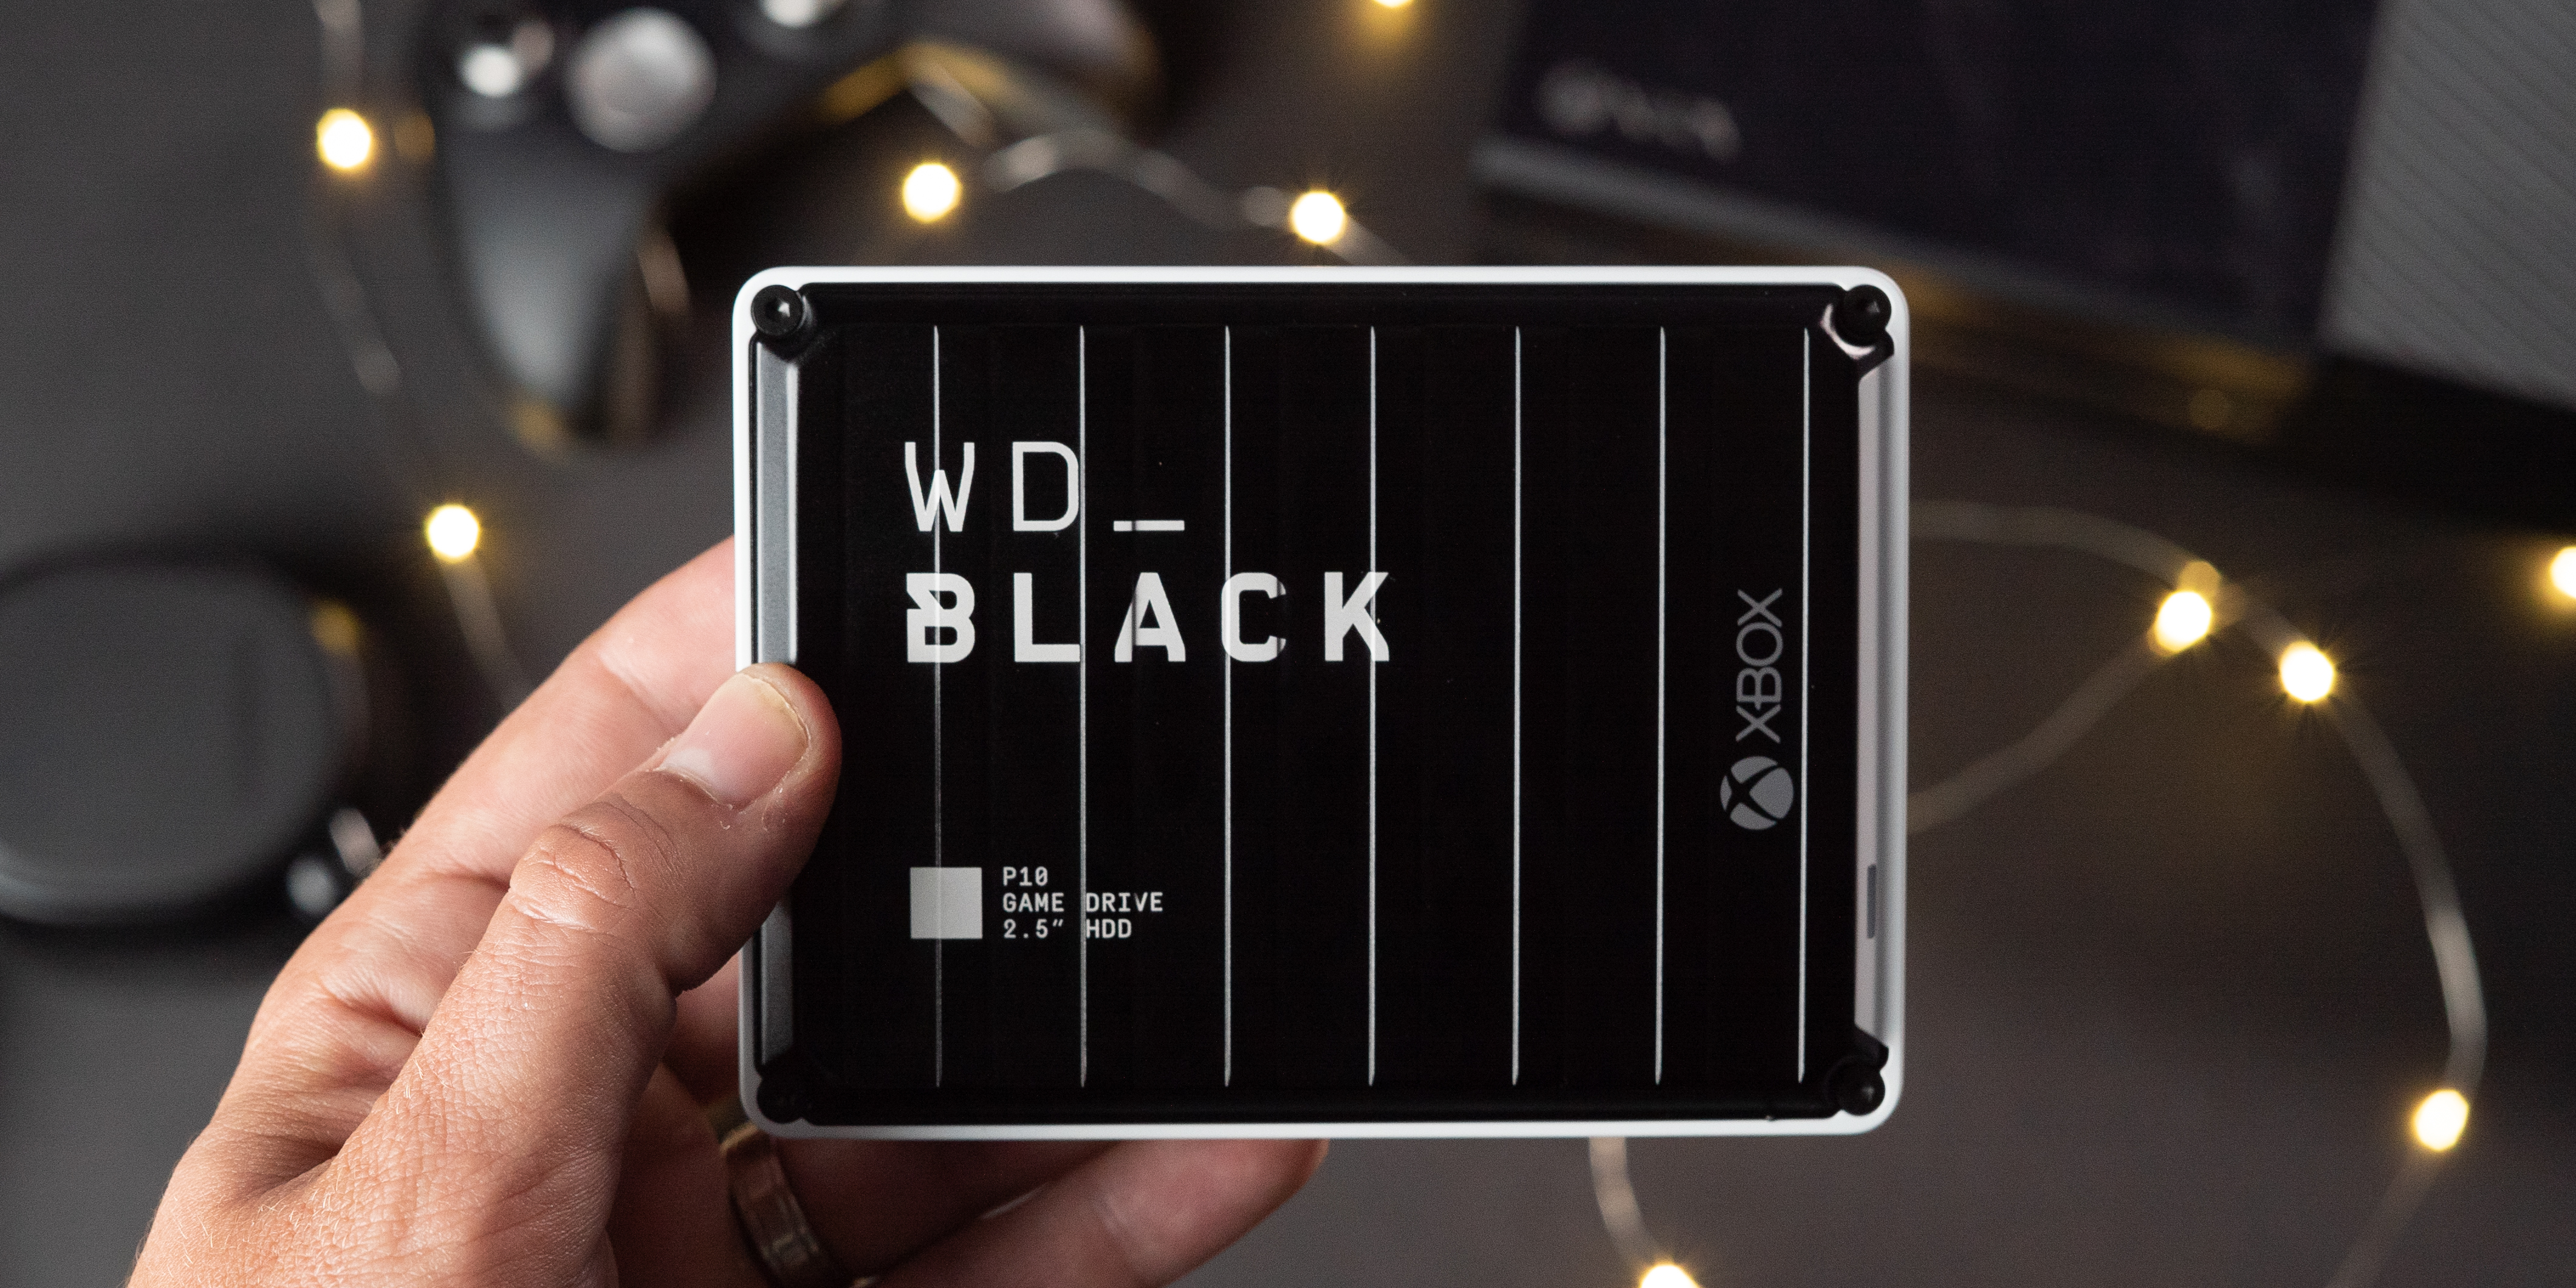 Wd gaming drive. WD Black p10. WD_Black 4tb p10. WD_Black p10 game Drive. Western Digital WD_Black p10 game Drive.